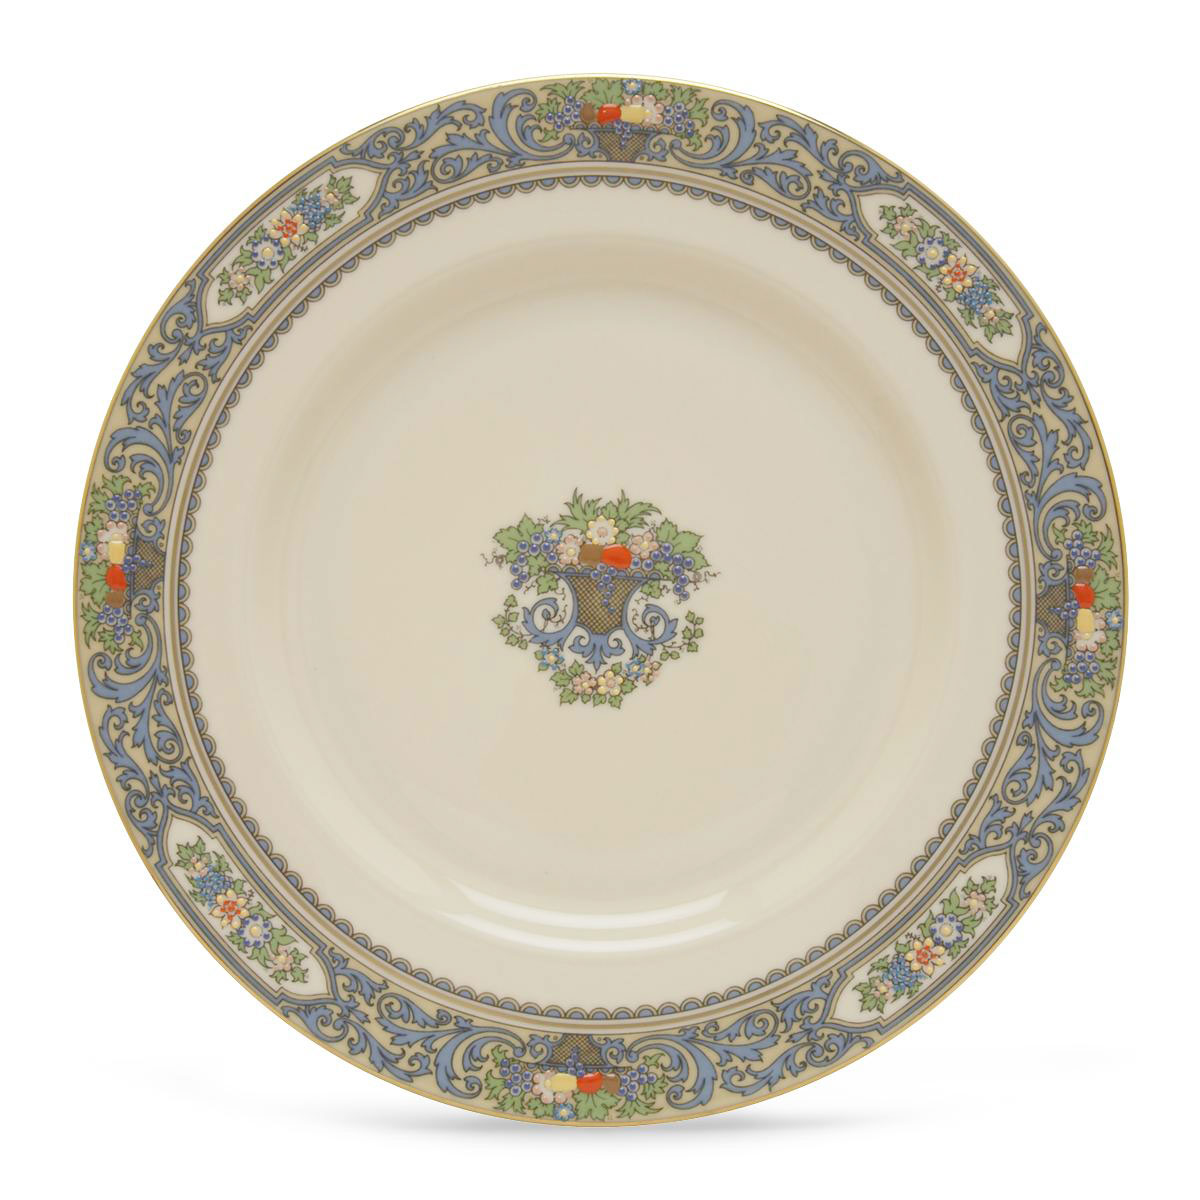 Lenox Autumn Dinner Plate, Single